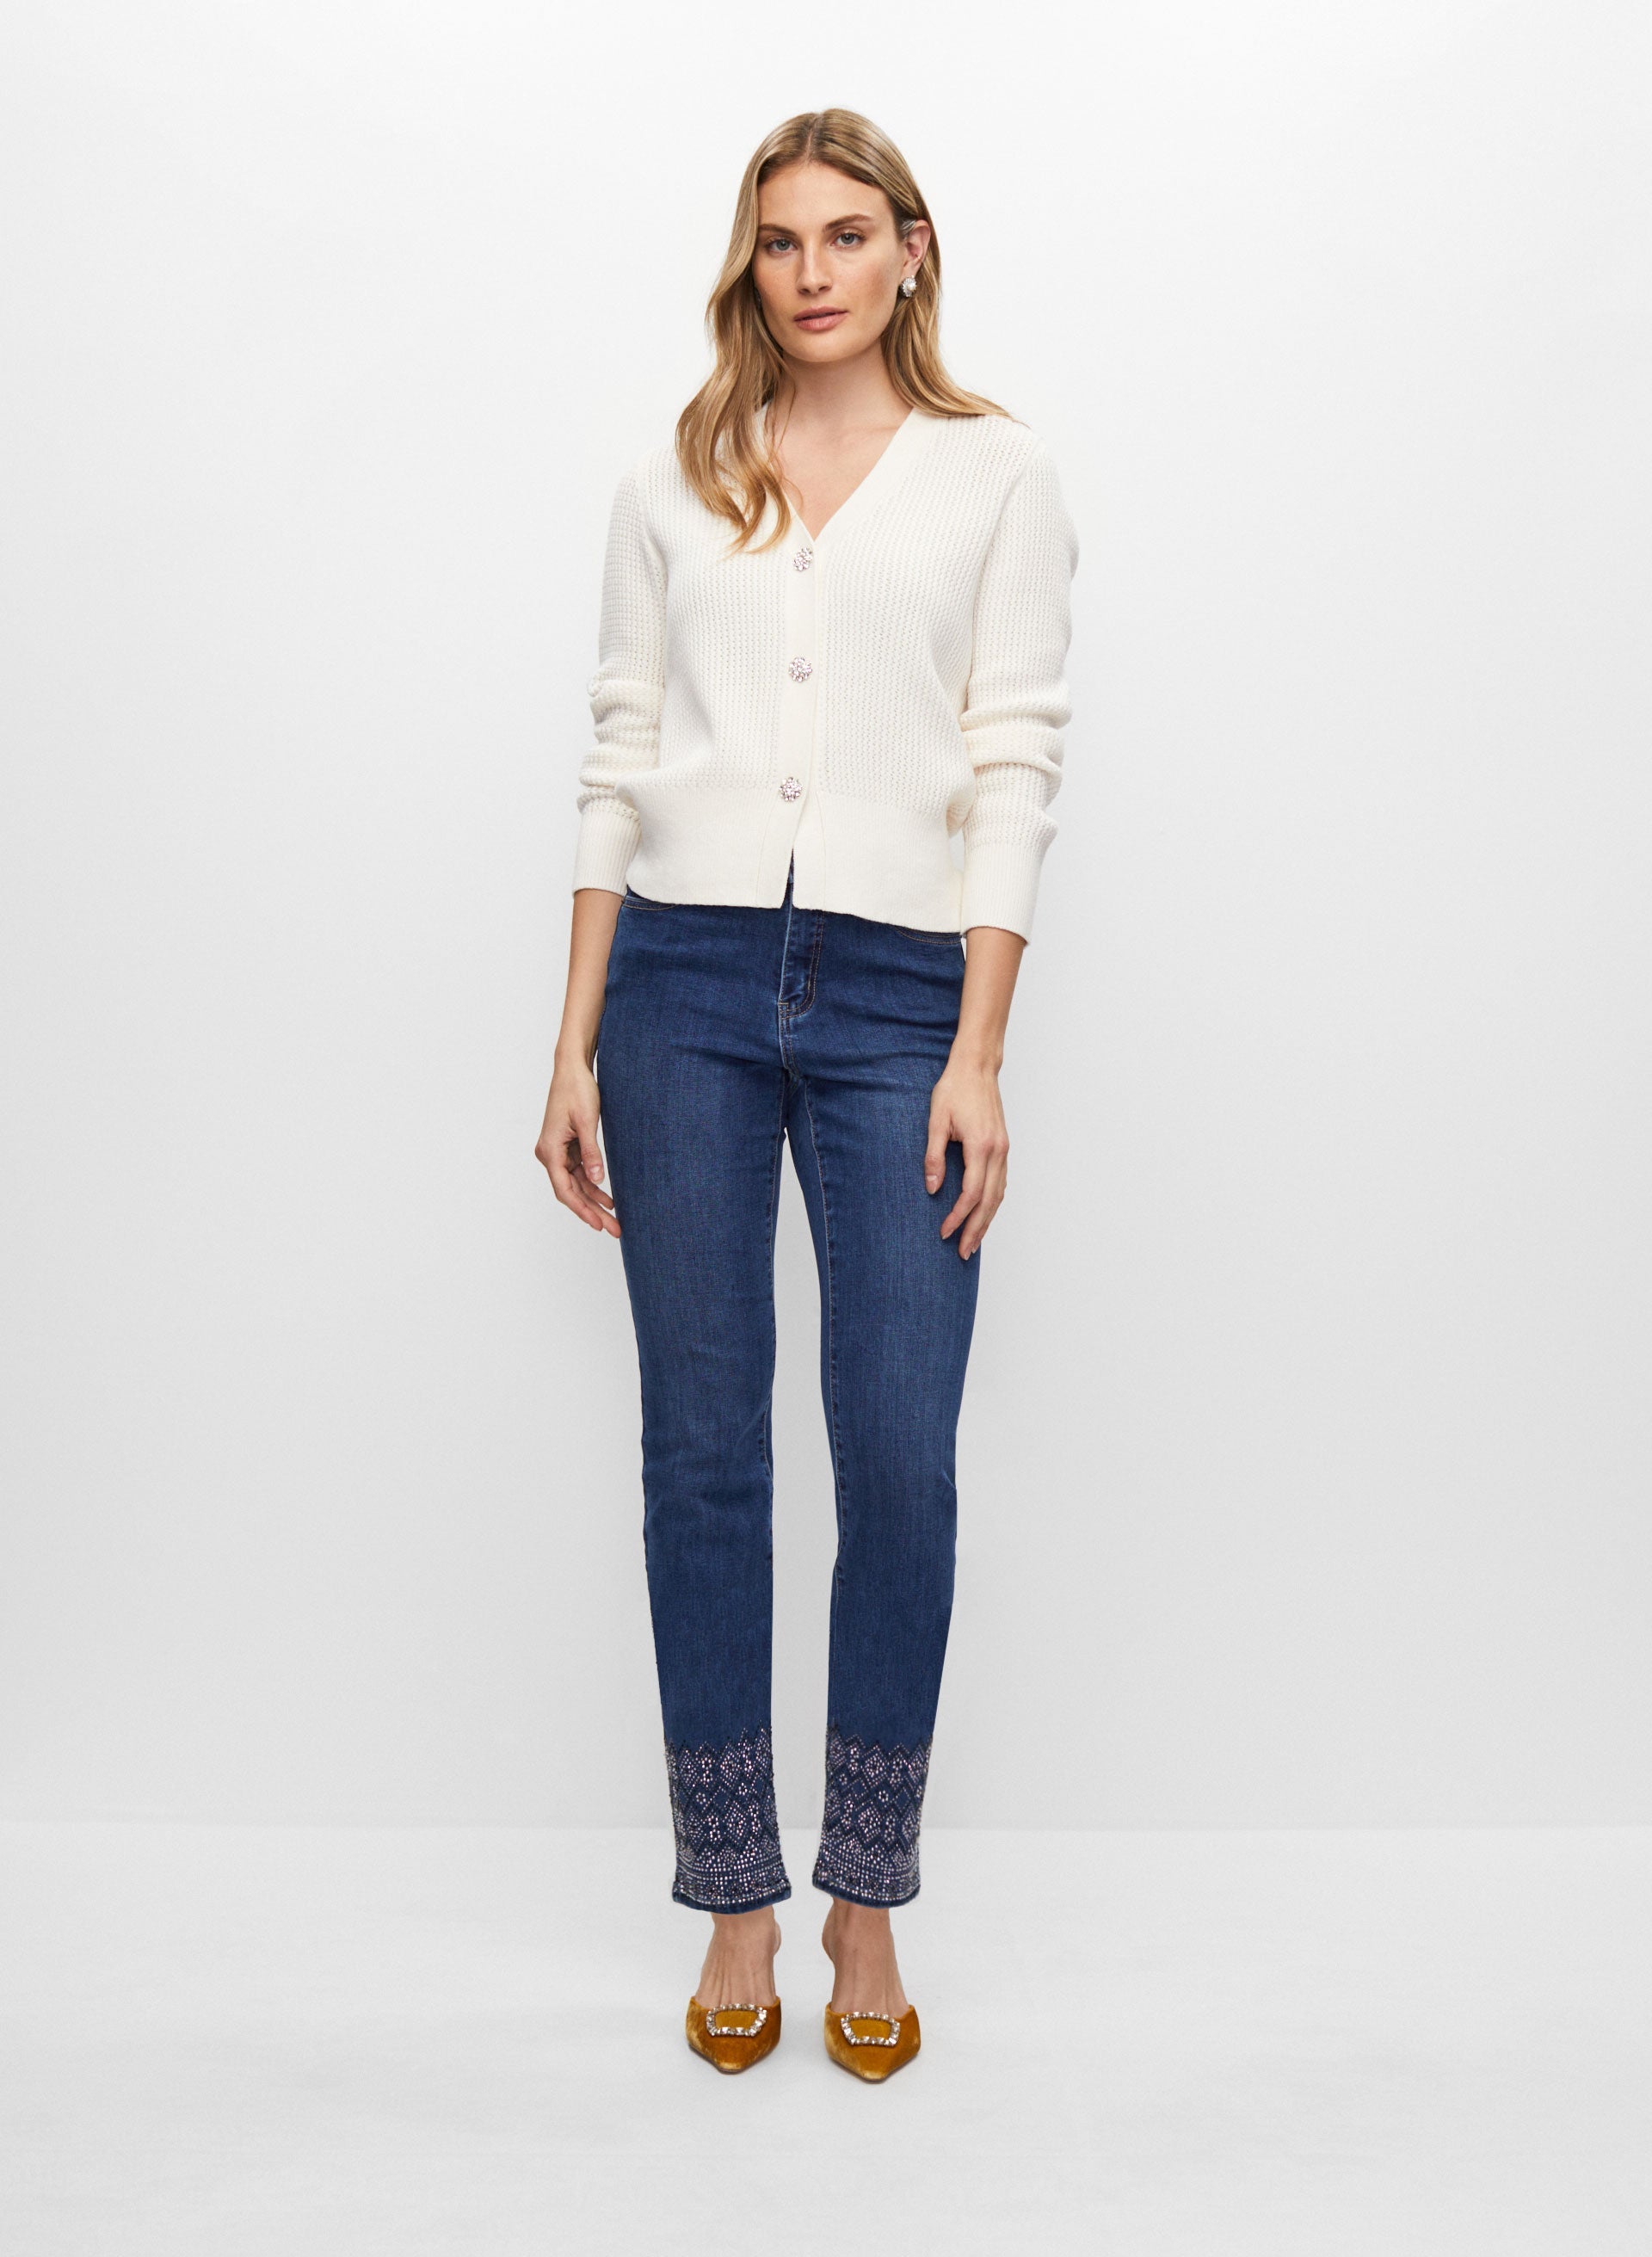 Embellished Jeans & Jewel Button Cardigan